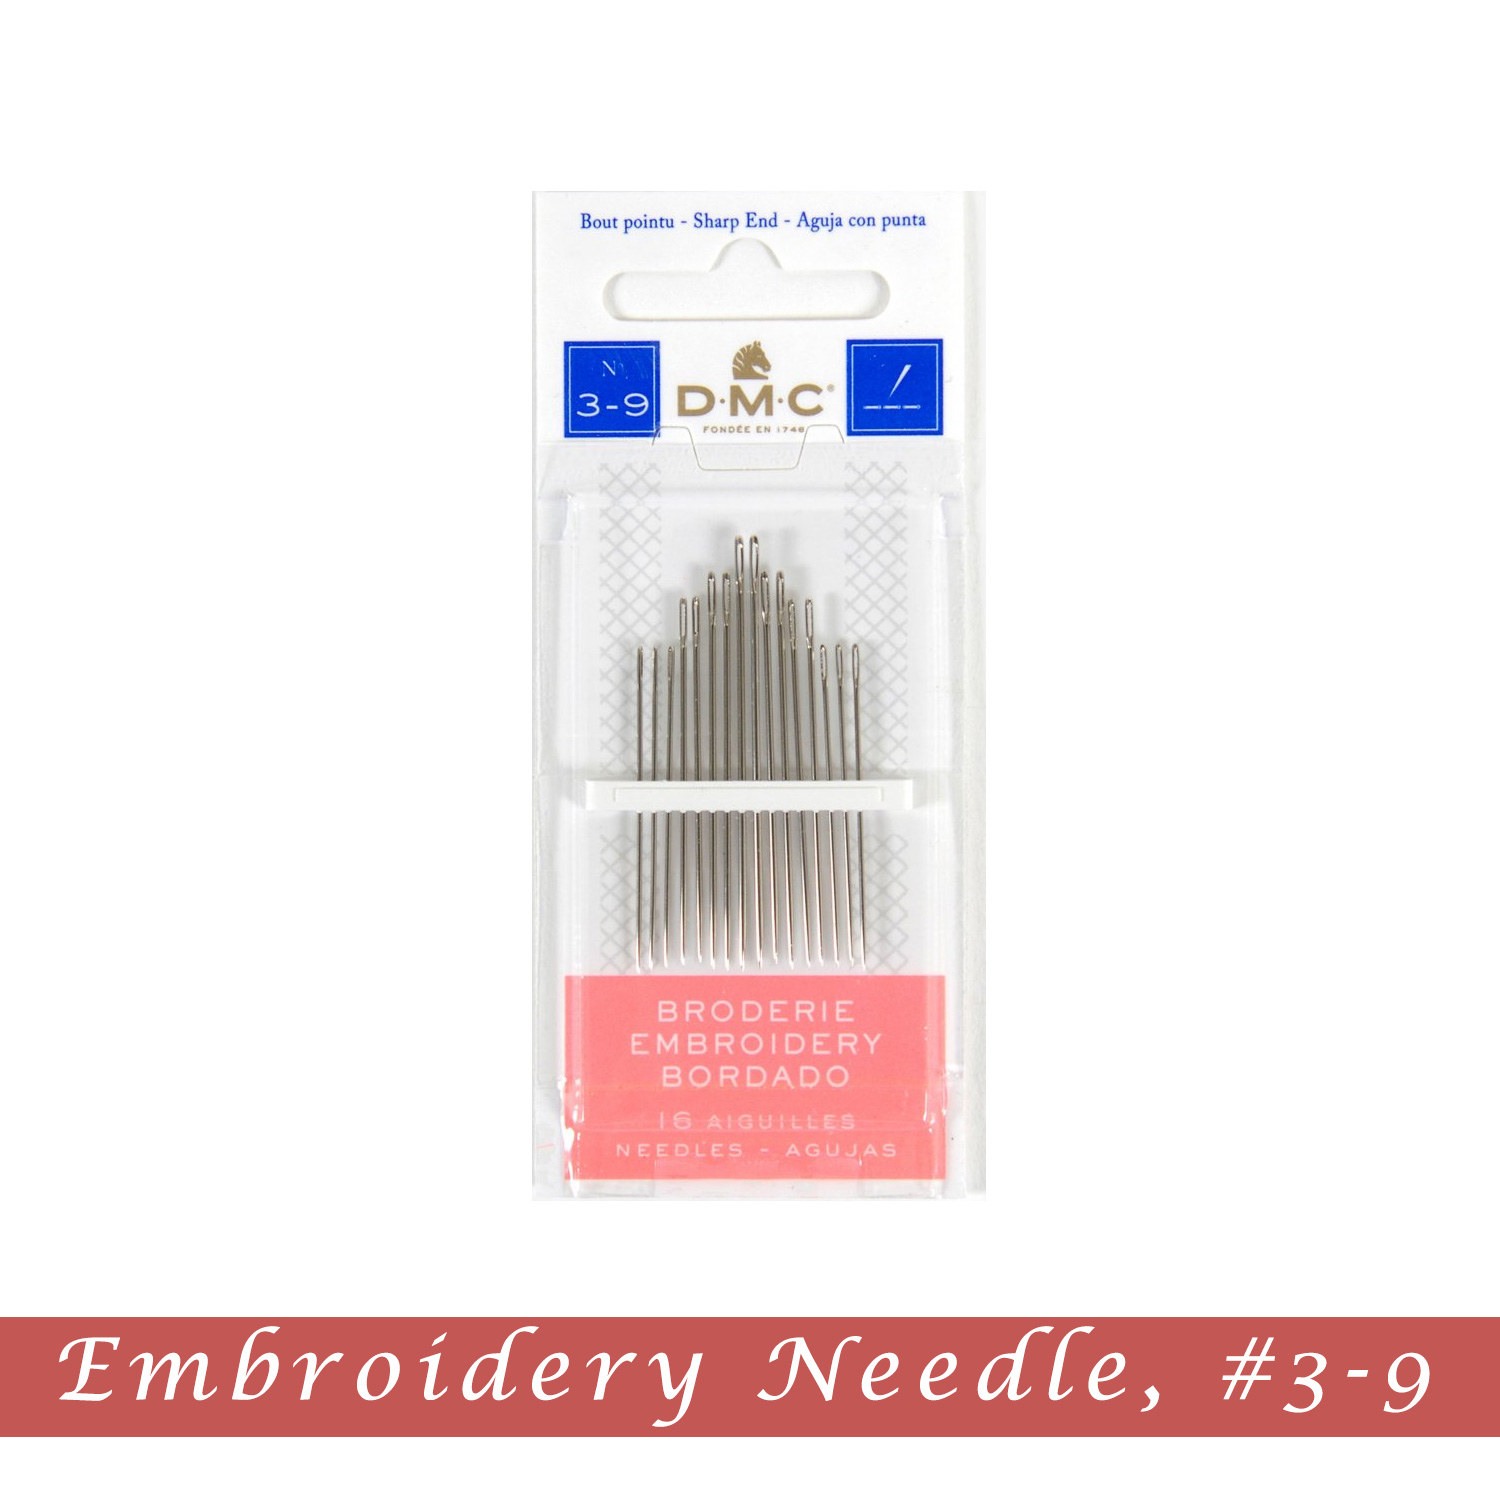 DMC1765-2 Embroidery Needle"", #3-9 (pcs)